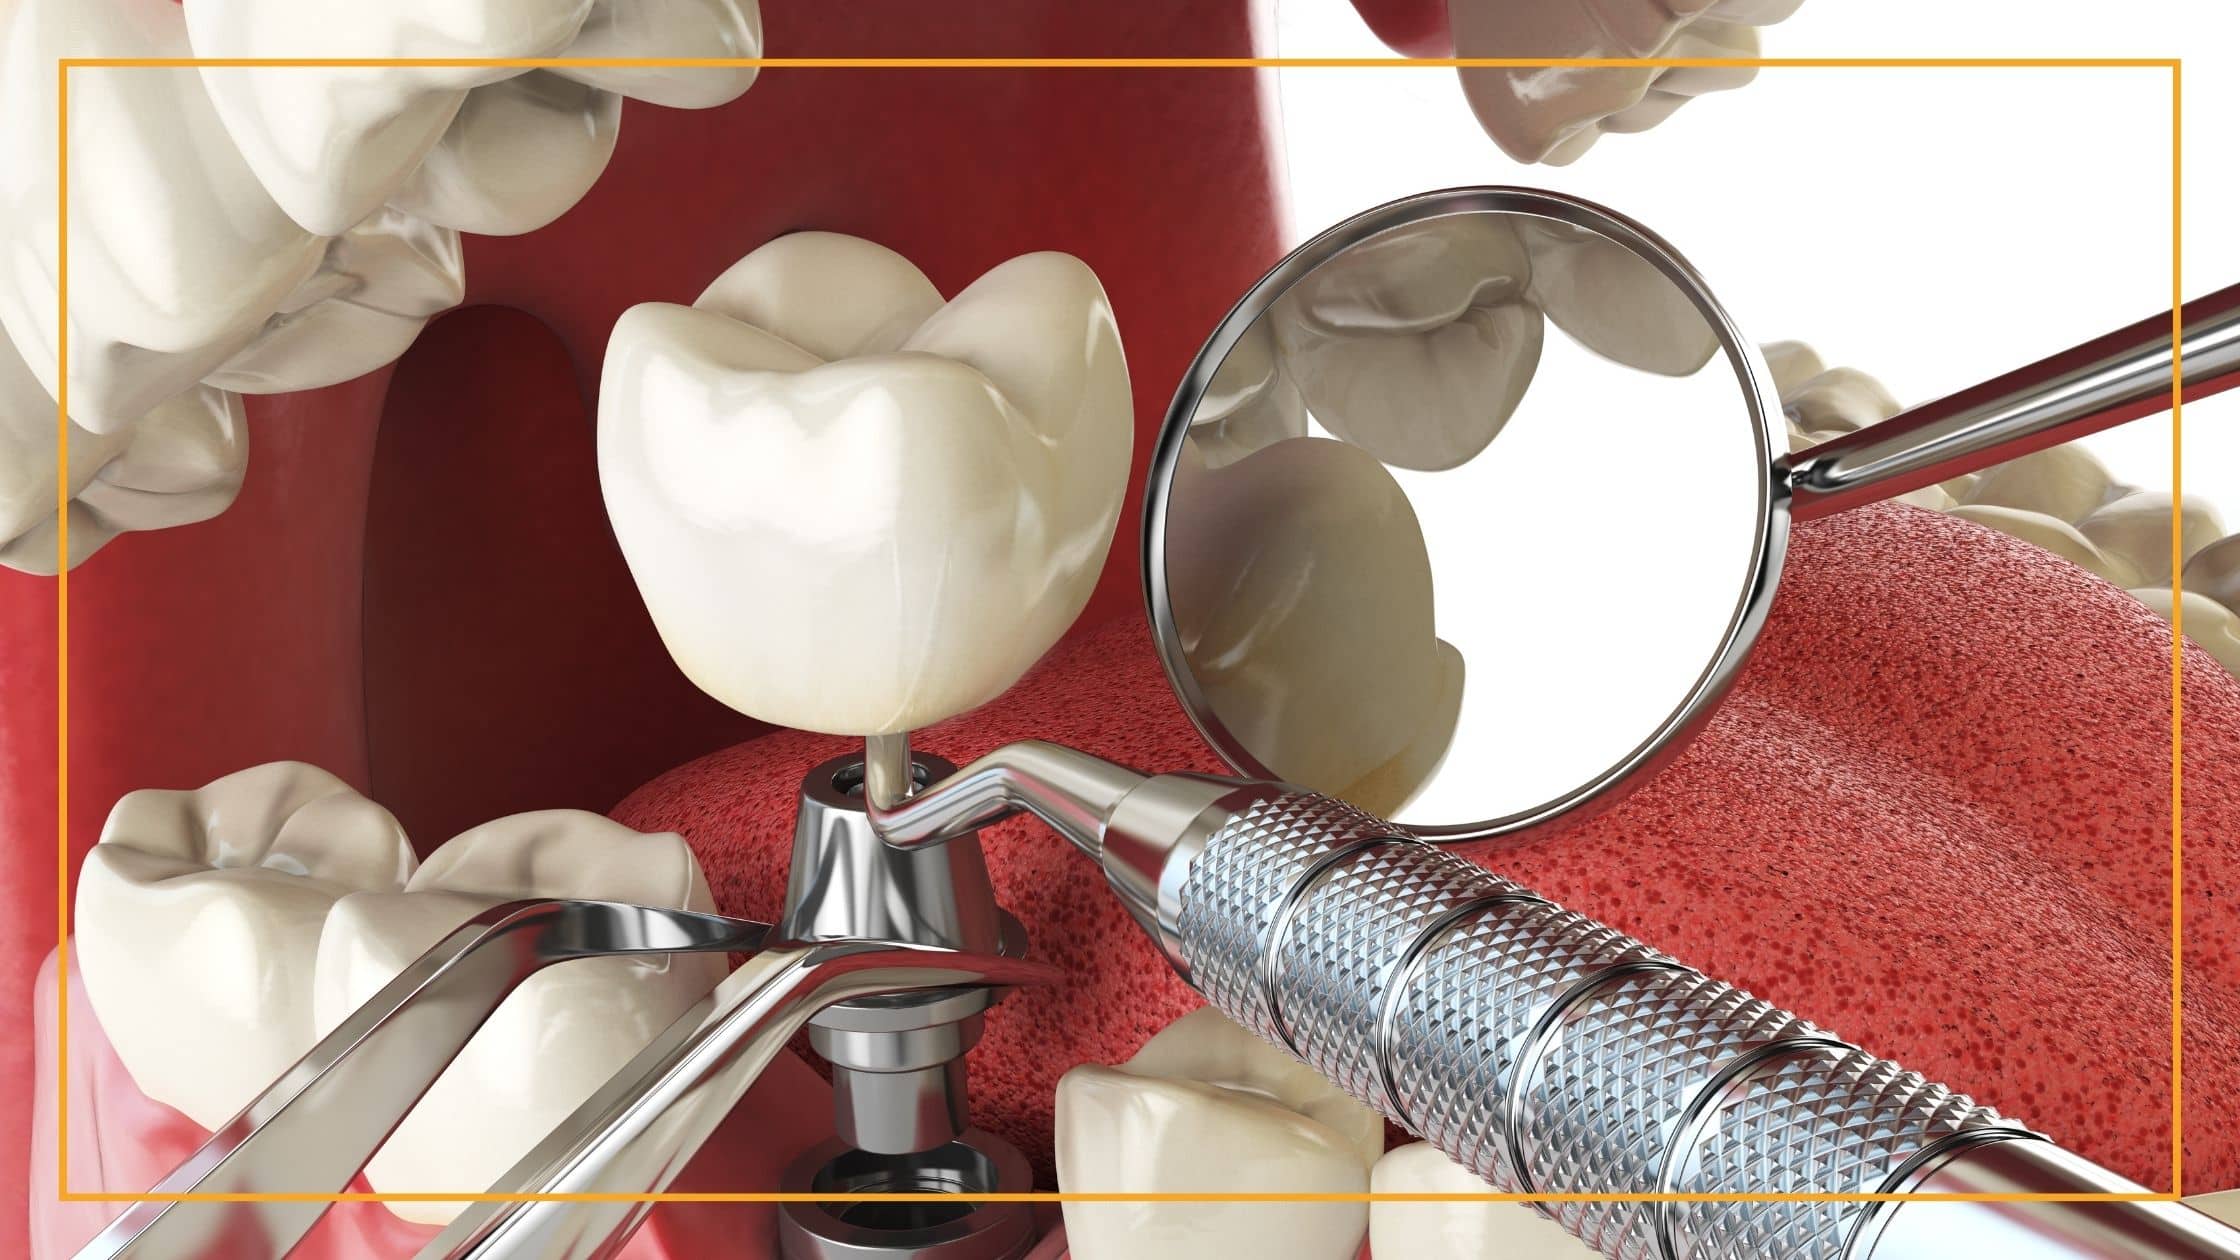 Getting a Dental Implant - Singh Smile Care - Dentist Glendale, AZ